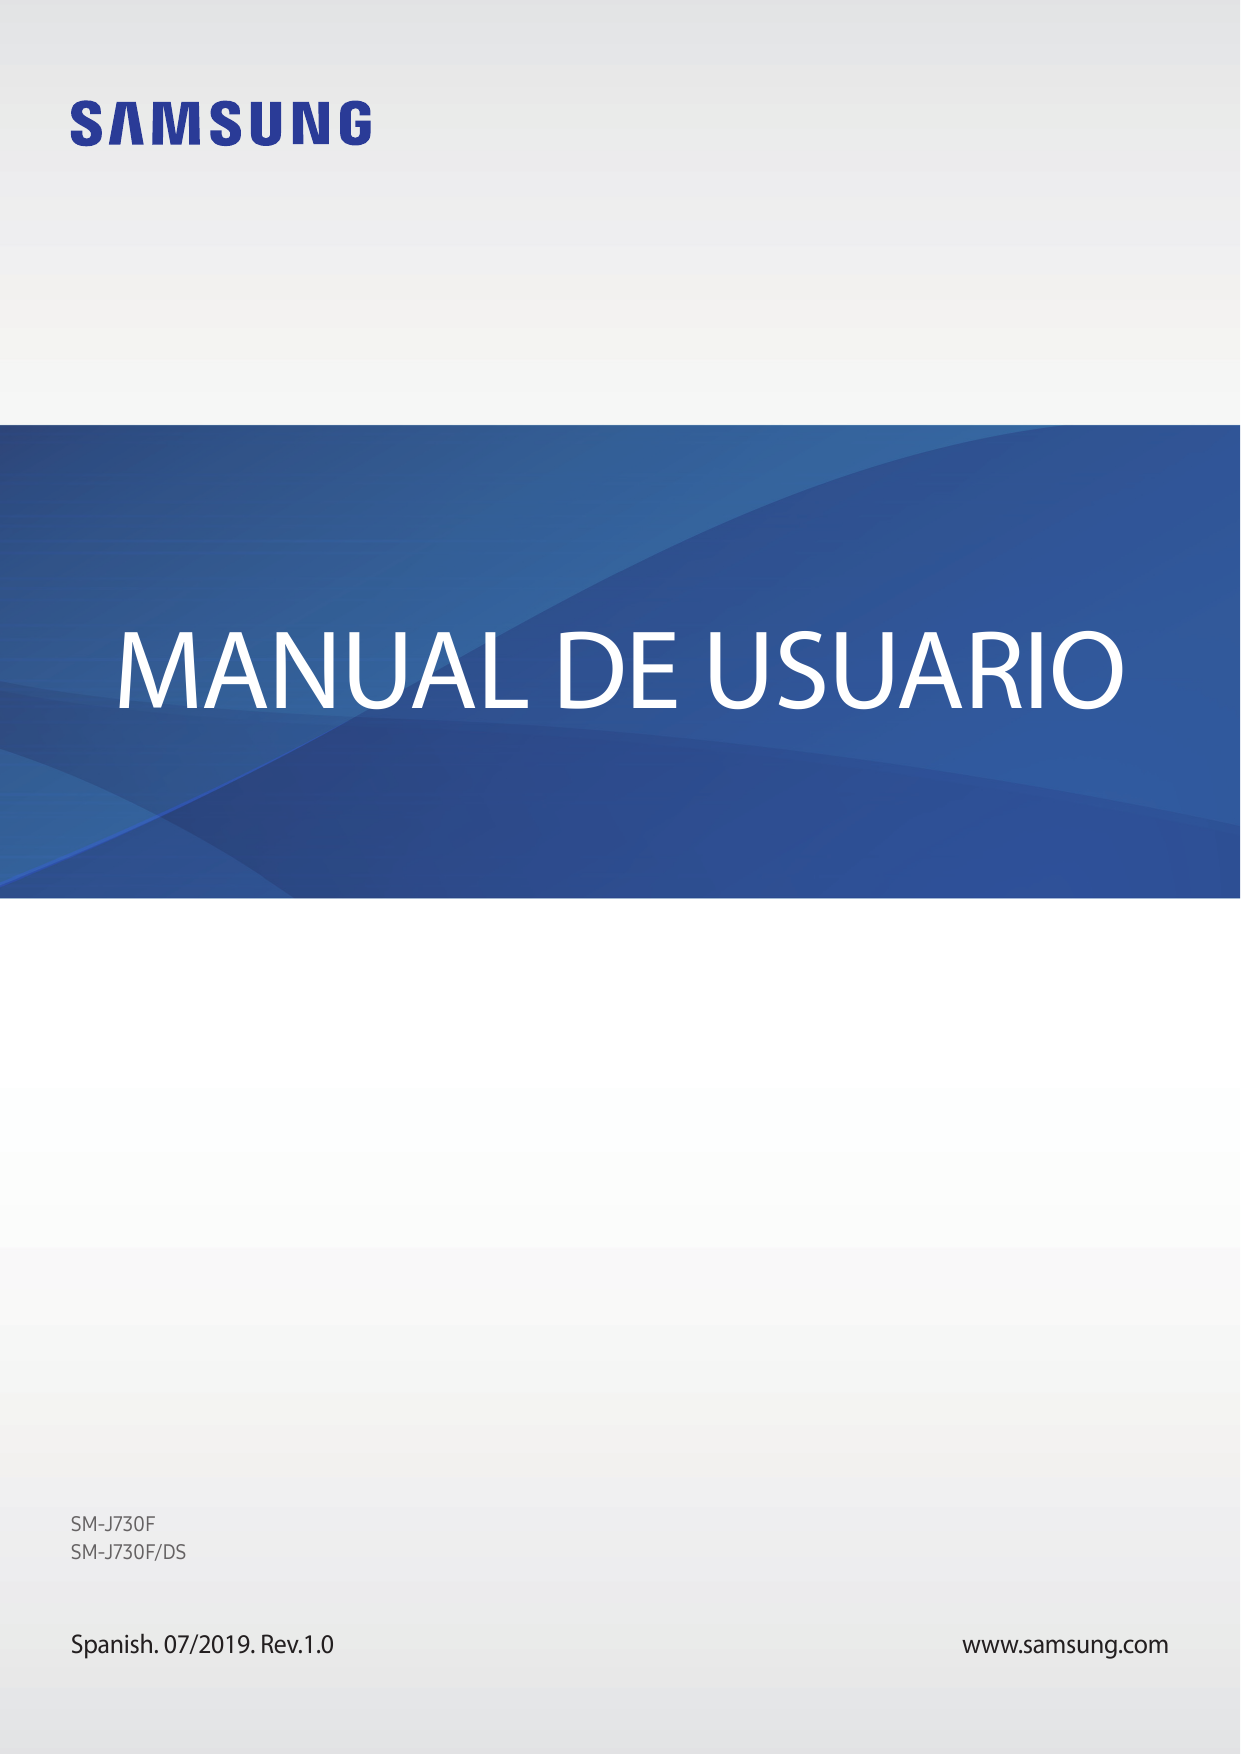 MANUAL DE USUARIOSM-J730FSM-J730F/DSSpanish. 07/2019. Rev.1.0www.samsung.com